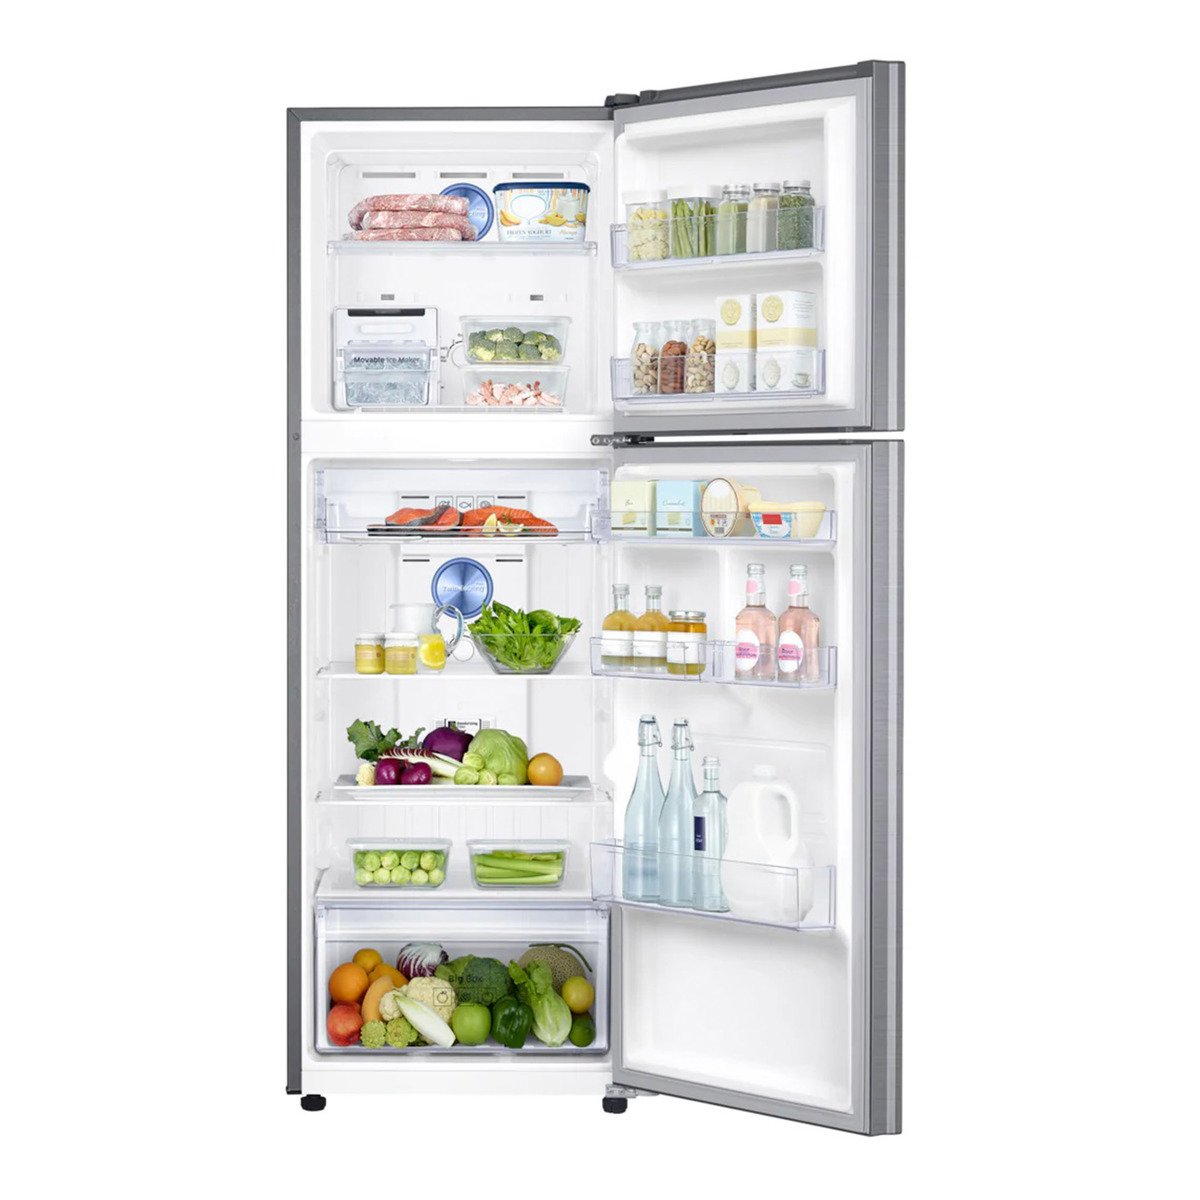 Samsung Double Door Refrigerator RT42K5030S8/SG 420Ltr